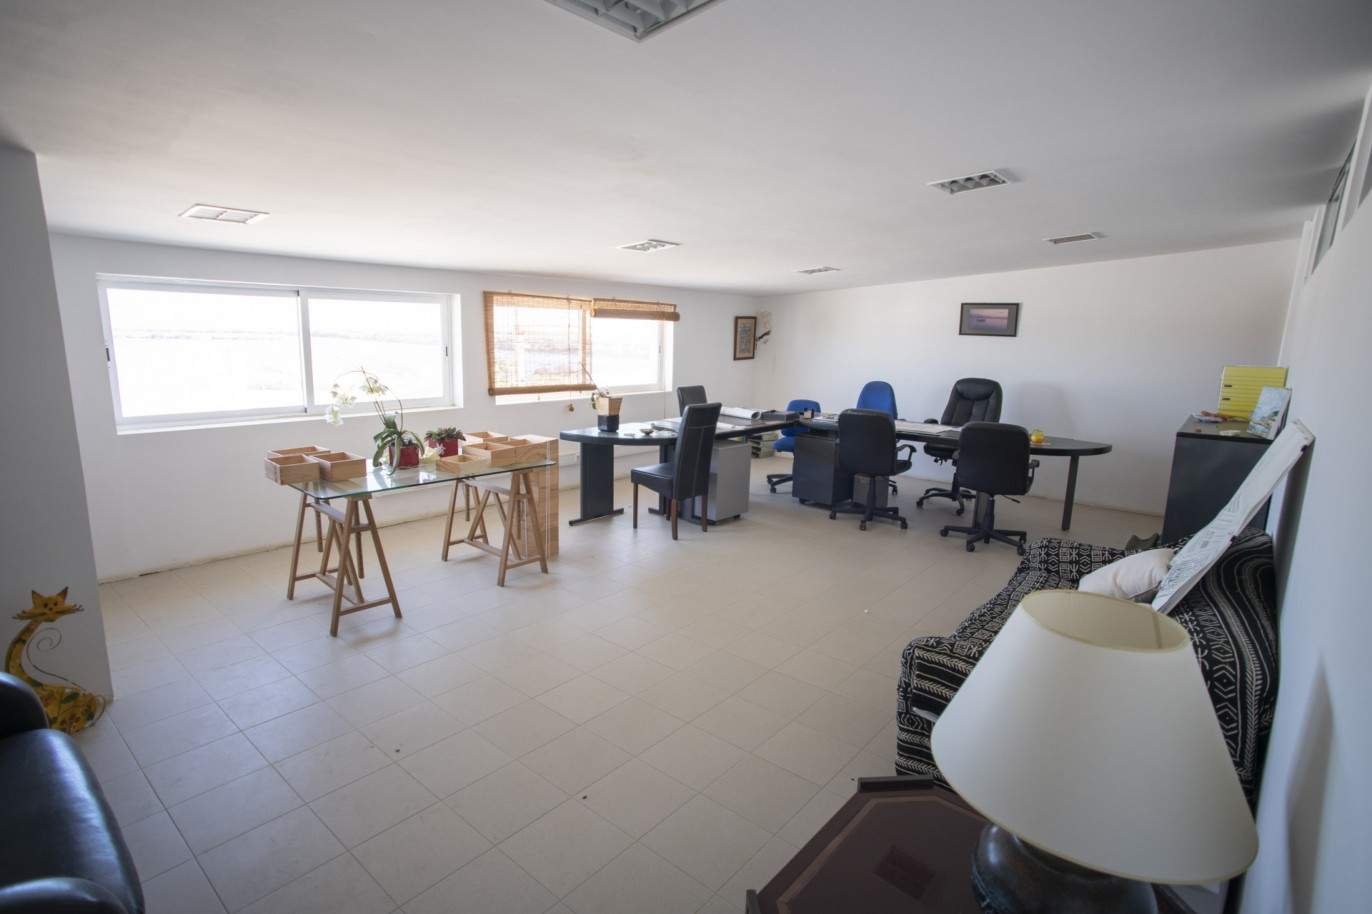 Property for sale in Ria Formosa, Algarve_209720